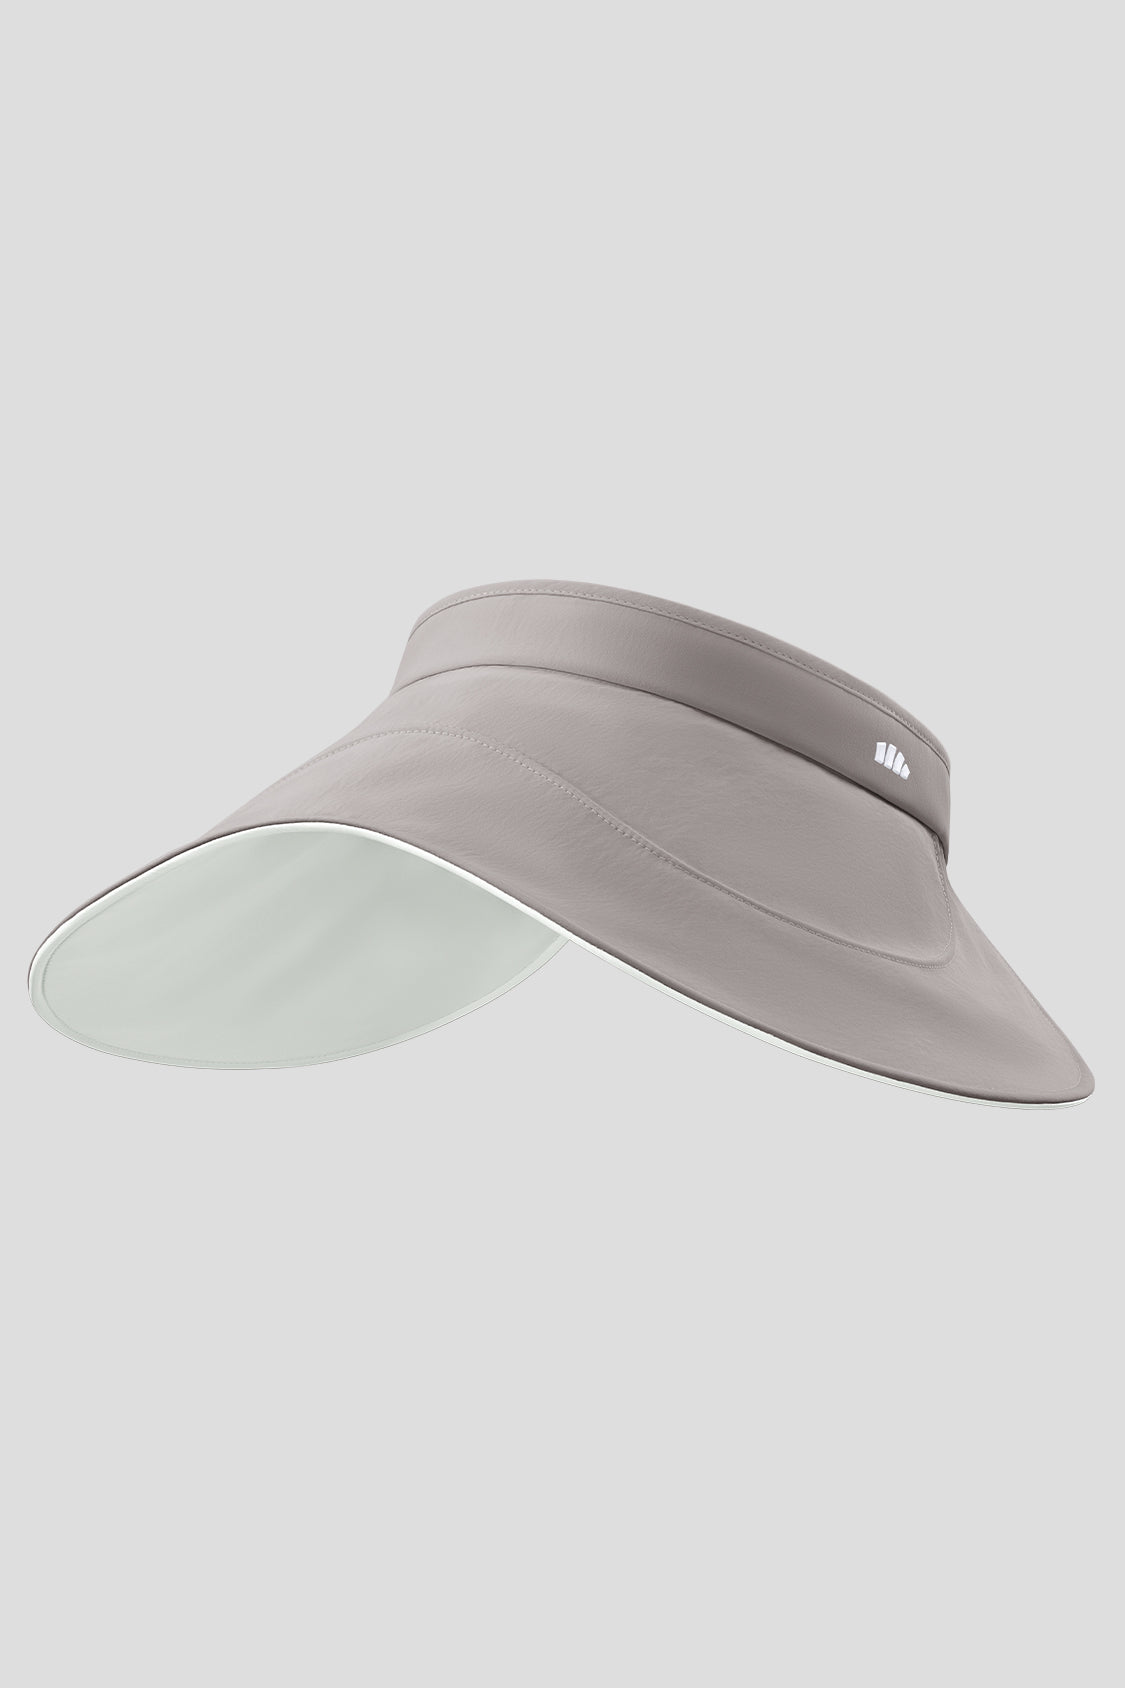 Sun Hat for Women, Beneunder 2-in-1 Sun Protection Hat UPF50+